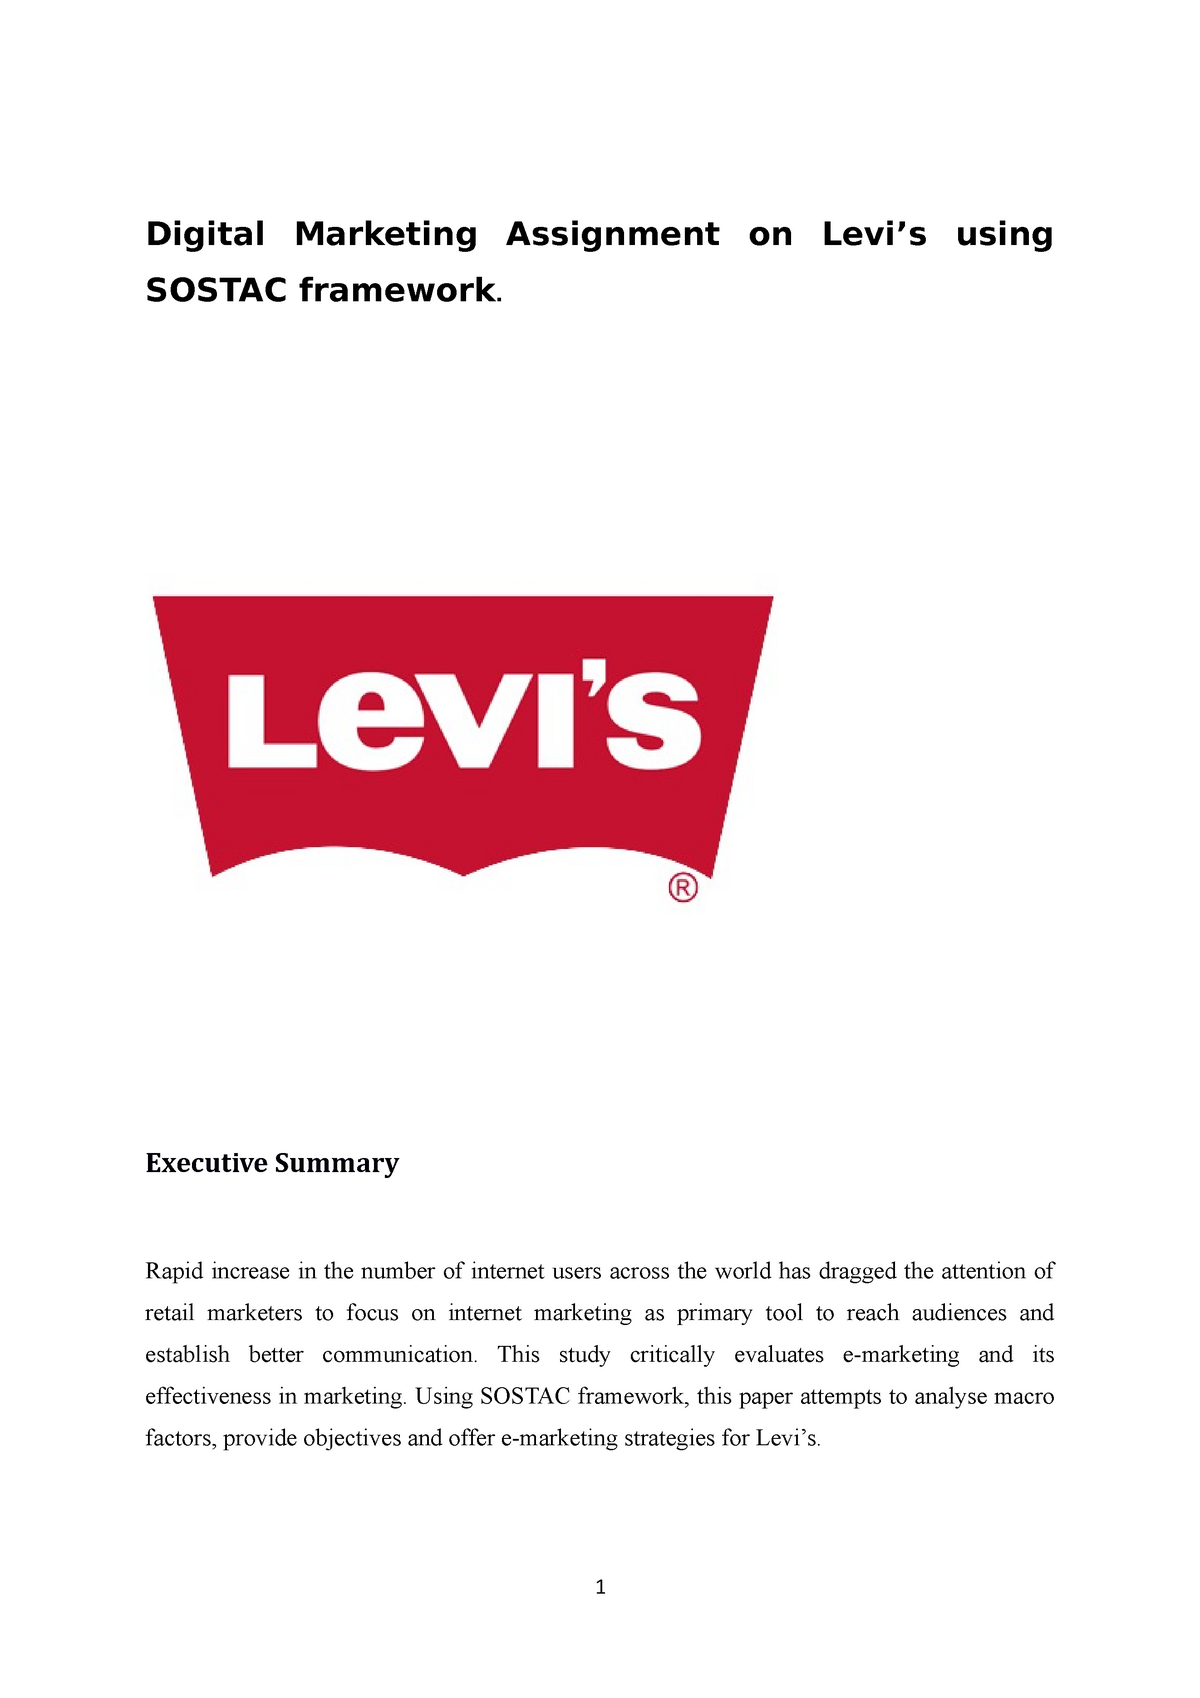 Digital Marketing Assignment On Levi's Using Sostac Framework - Digital  Marketing Assignment on - Studocu